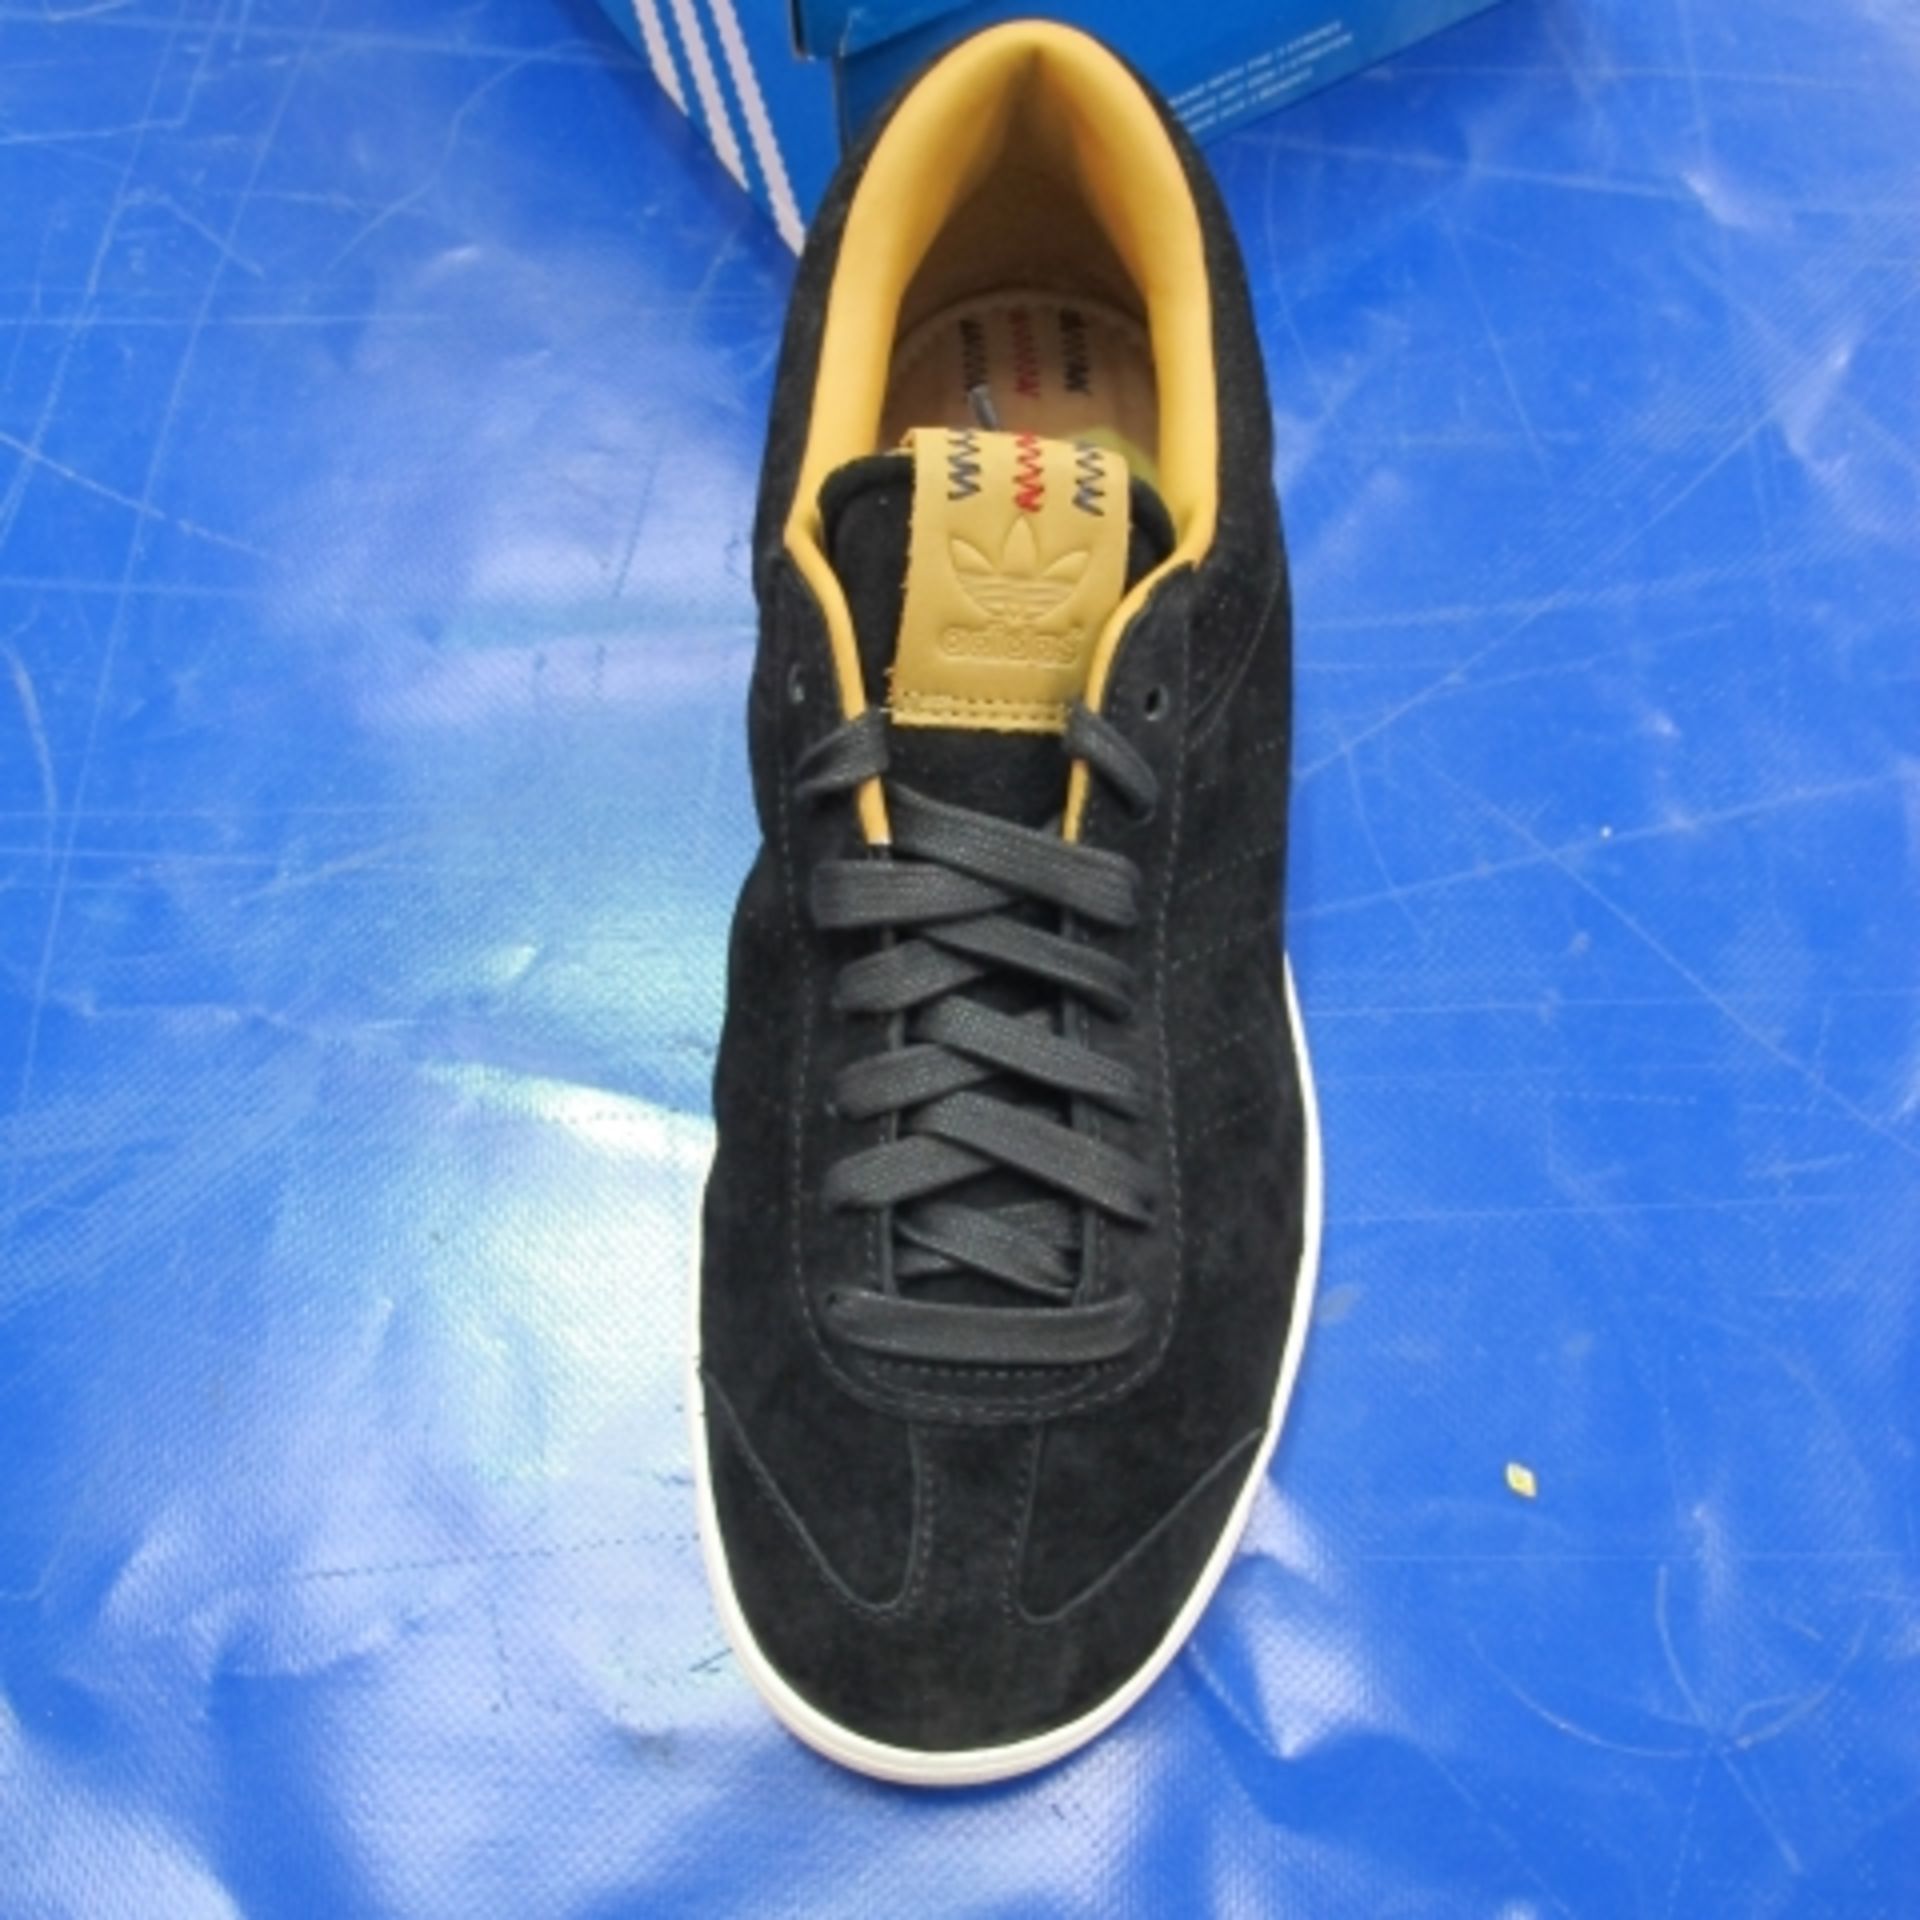 A pair of Adidas boxed shoes (new), UK size 8½ Hamburg Freizeit Shoes (RRP £79) (est £20-£40) - Image 2 of 5